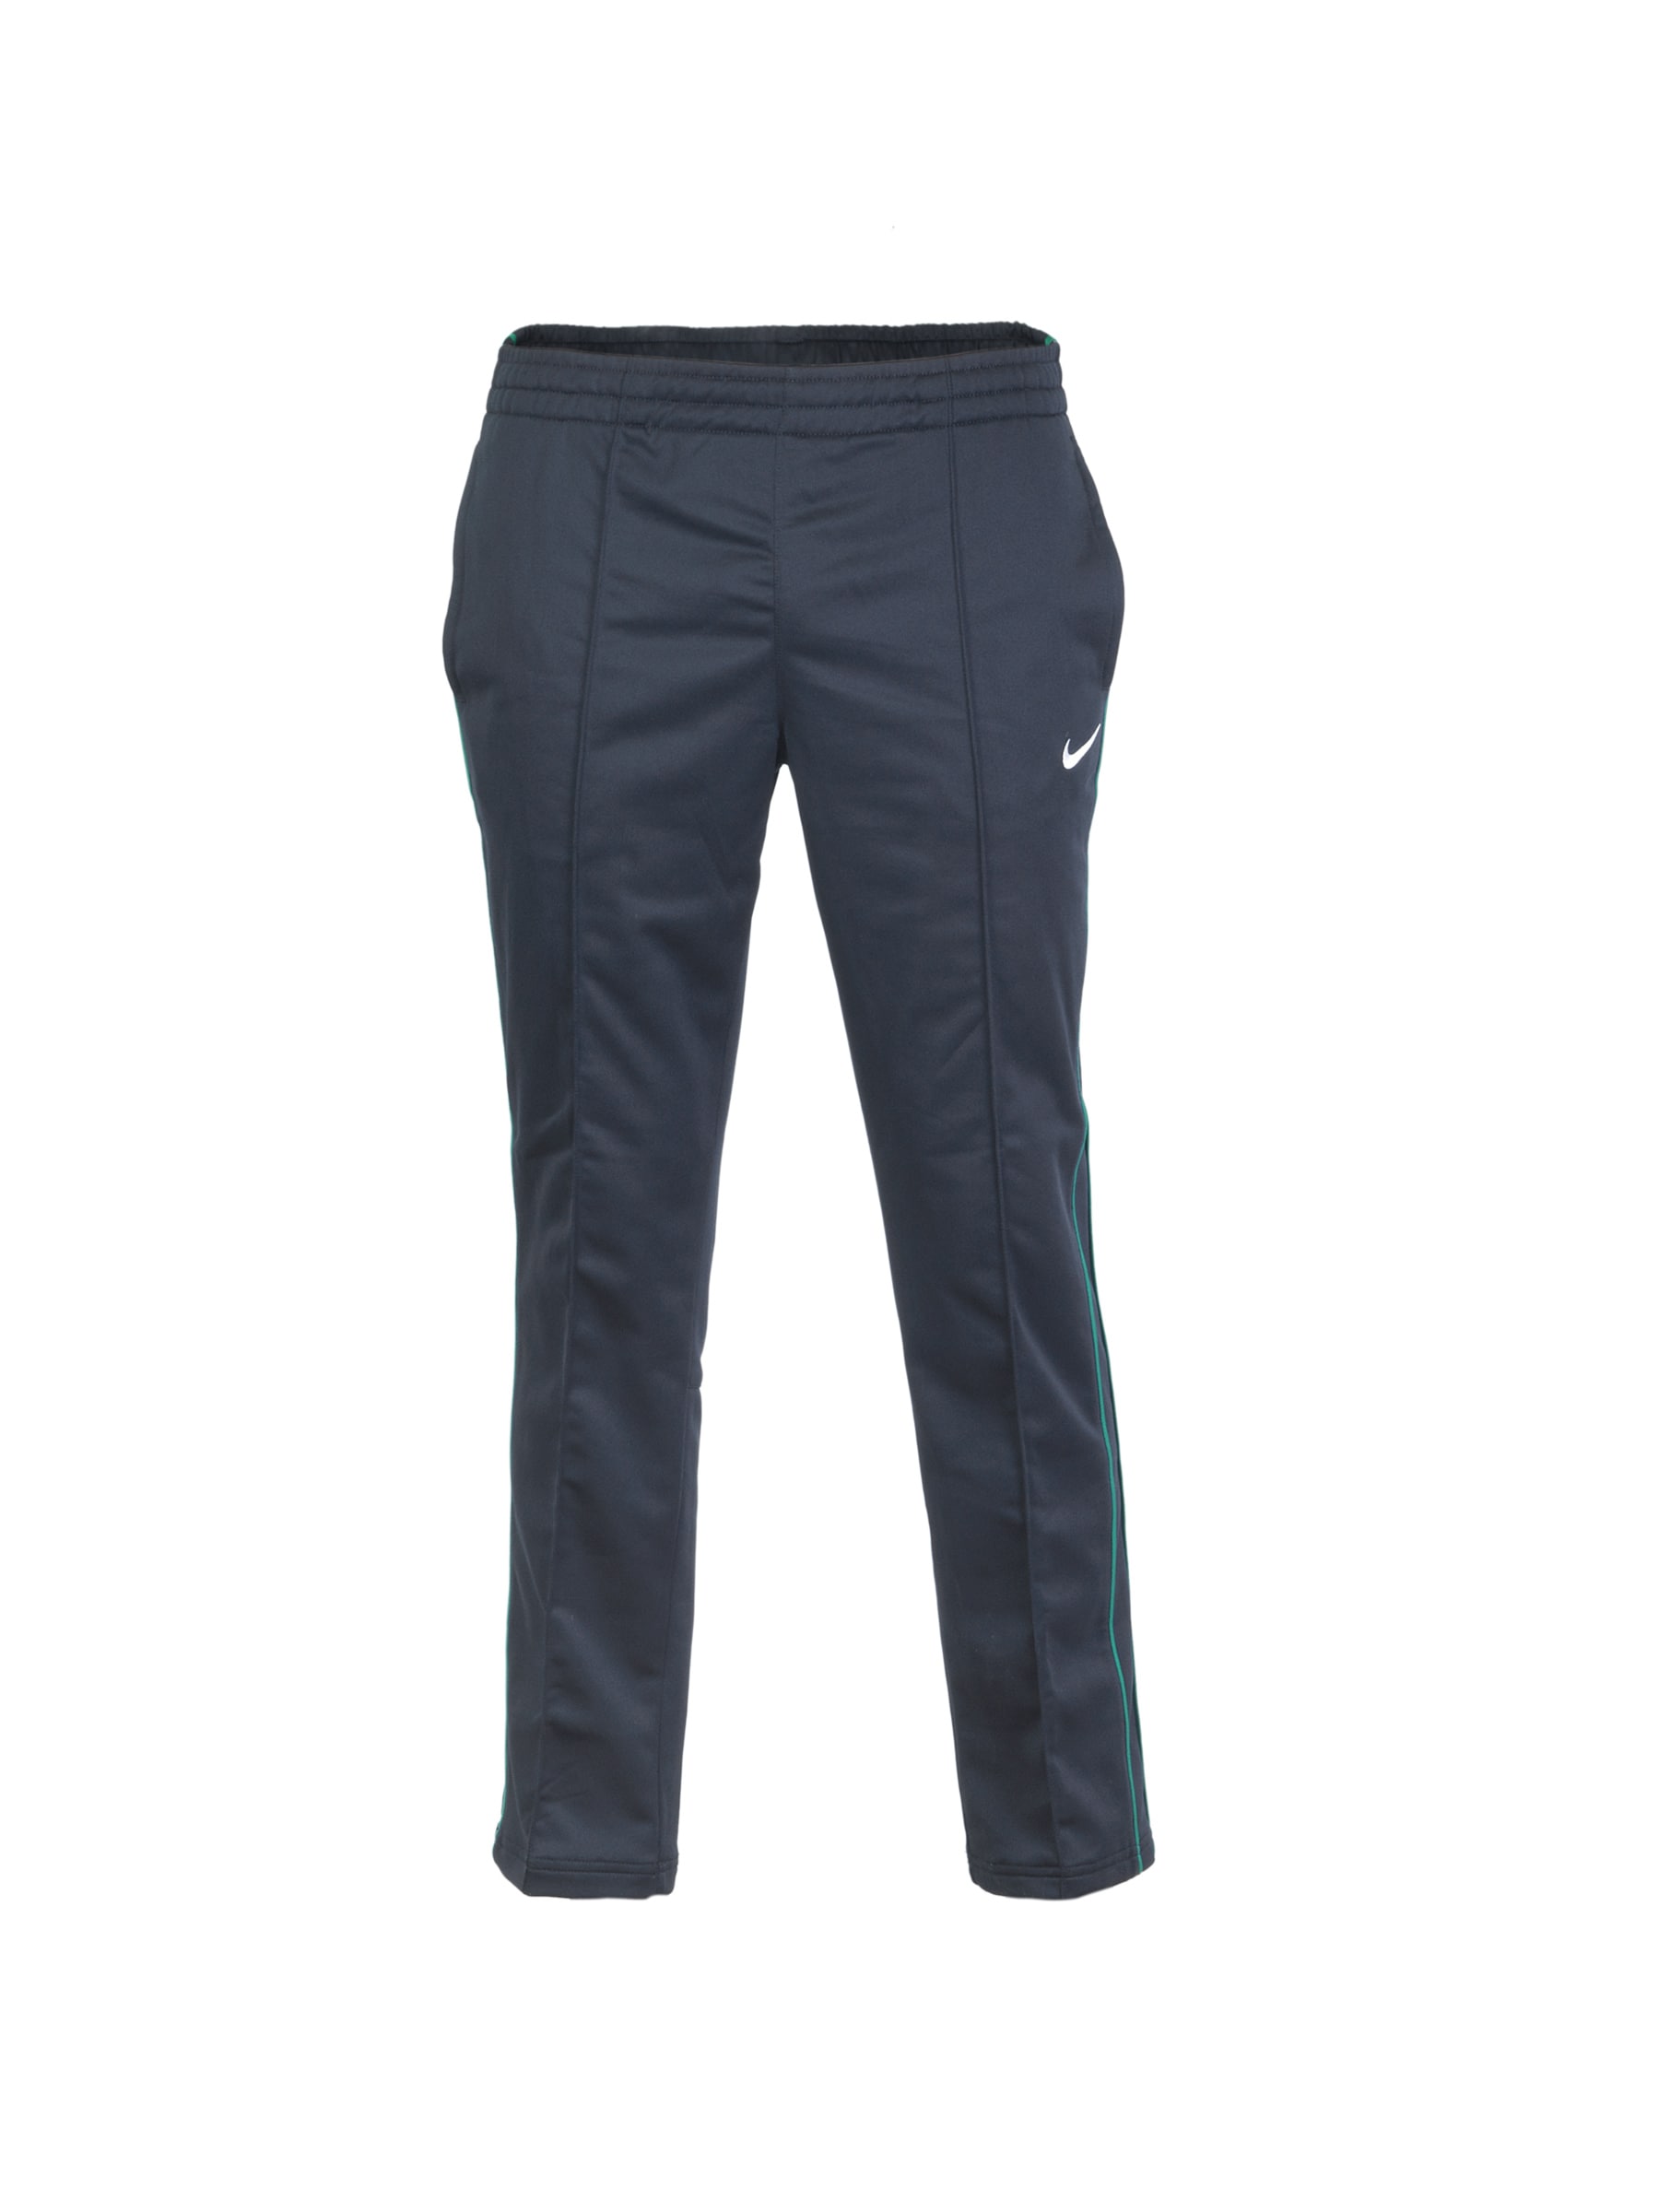 Nike Men Pintuck Navy Blue Track Pants